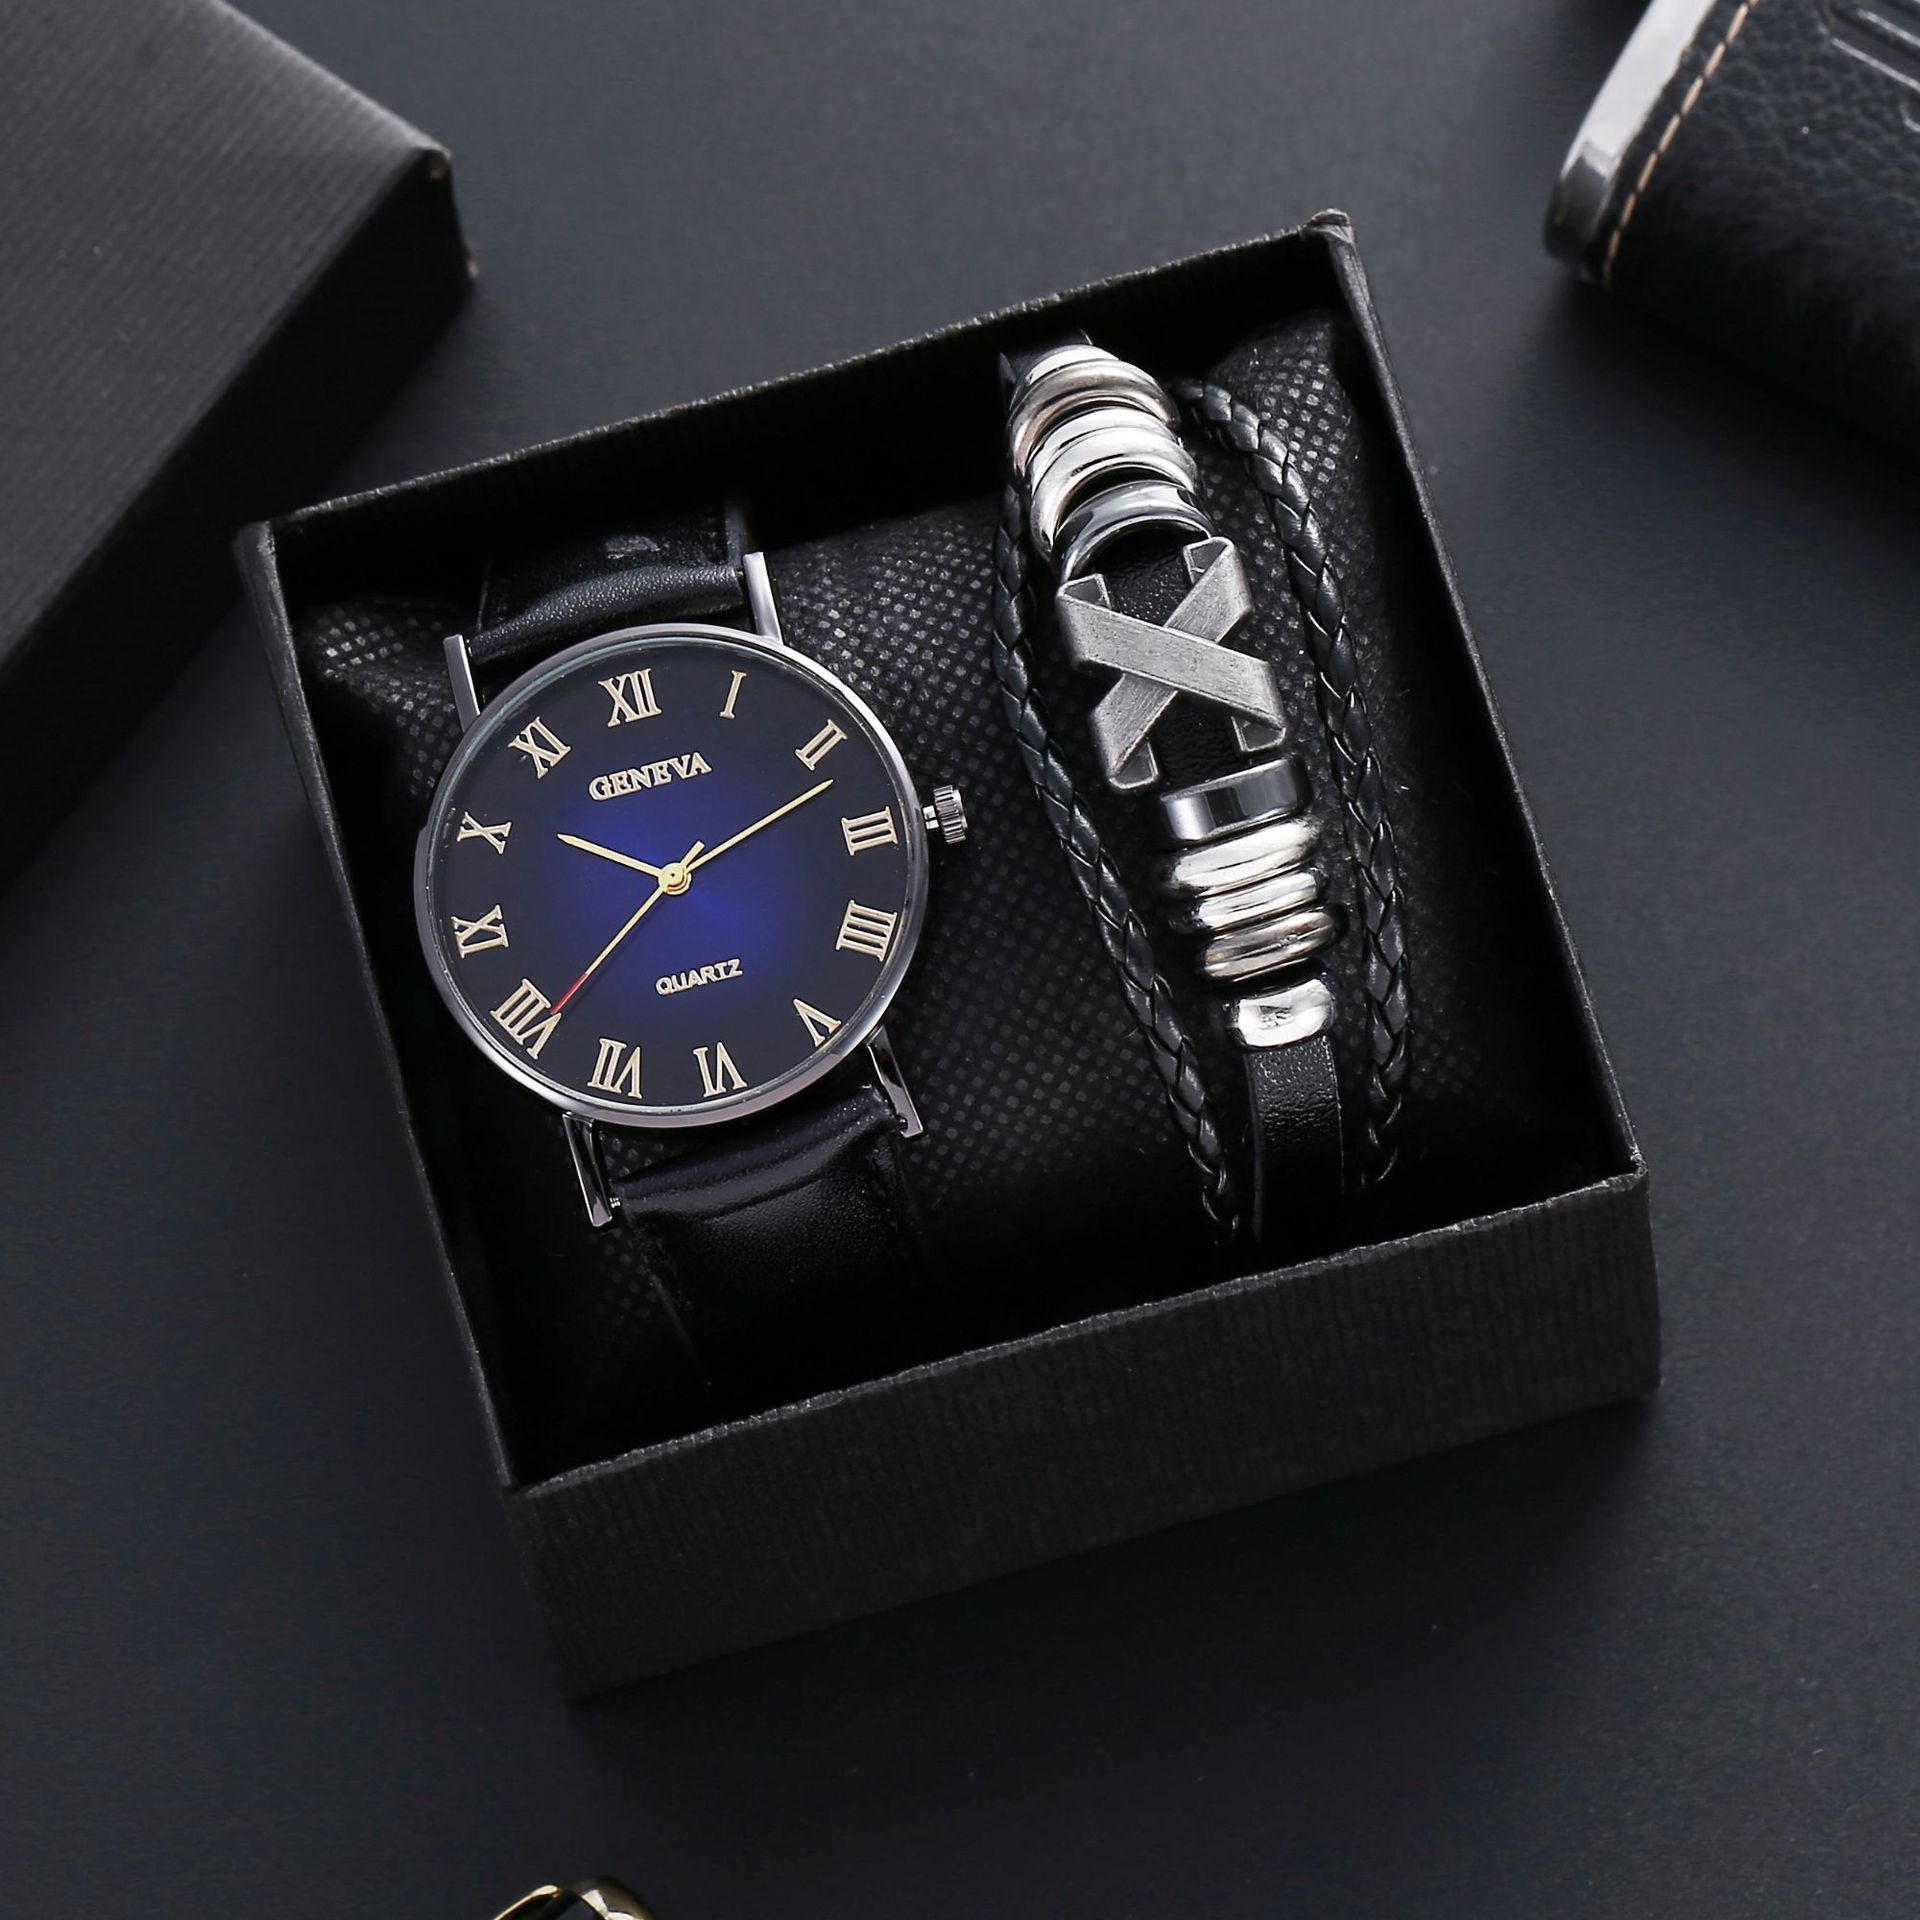 H watch, bracelet and box